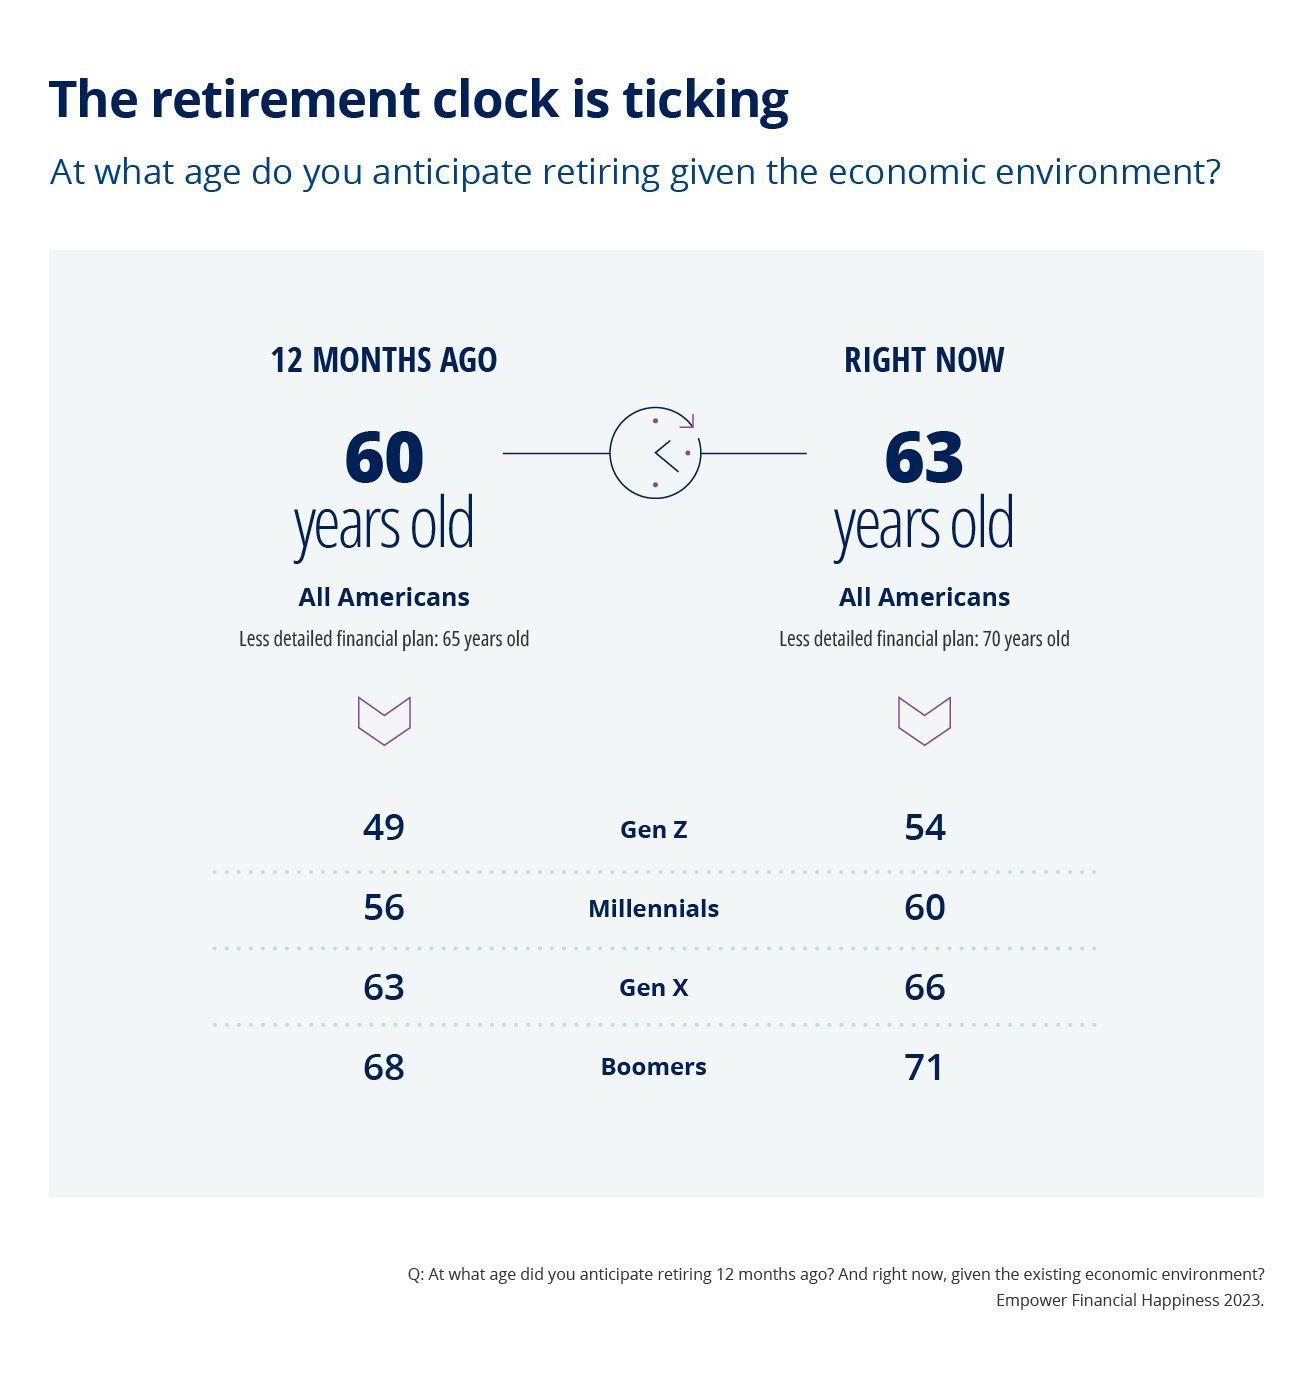 Financial Happiness_retirement clock